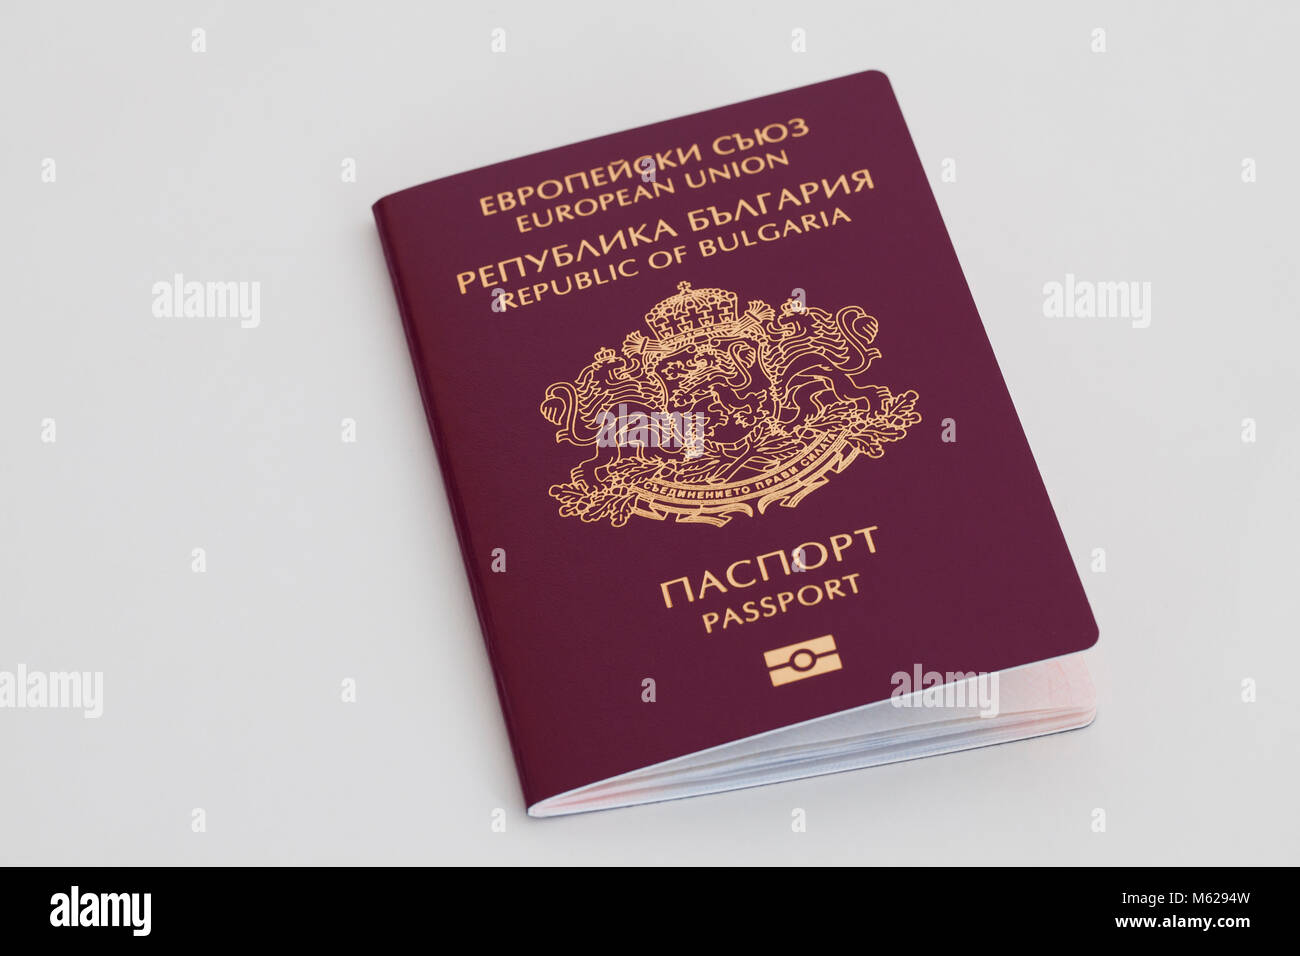 New Bulgarian passport (European Union Republic of Bulgaria) Stock Photo